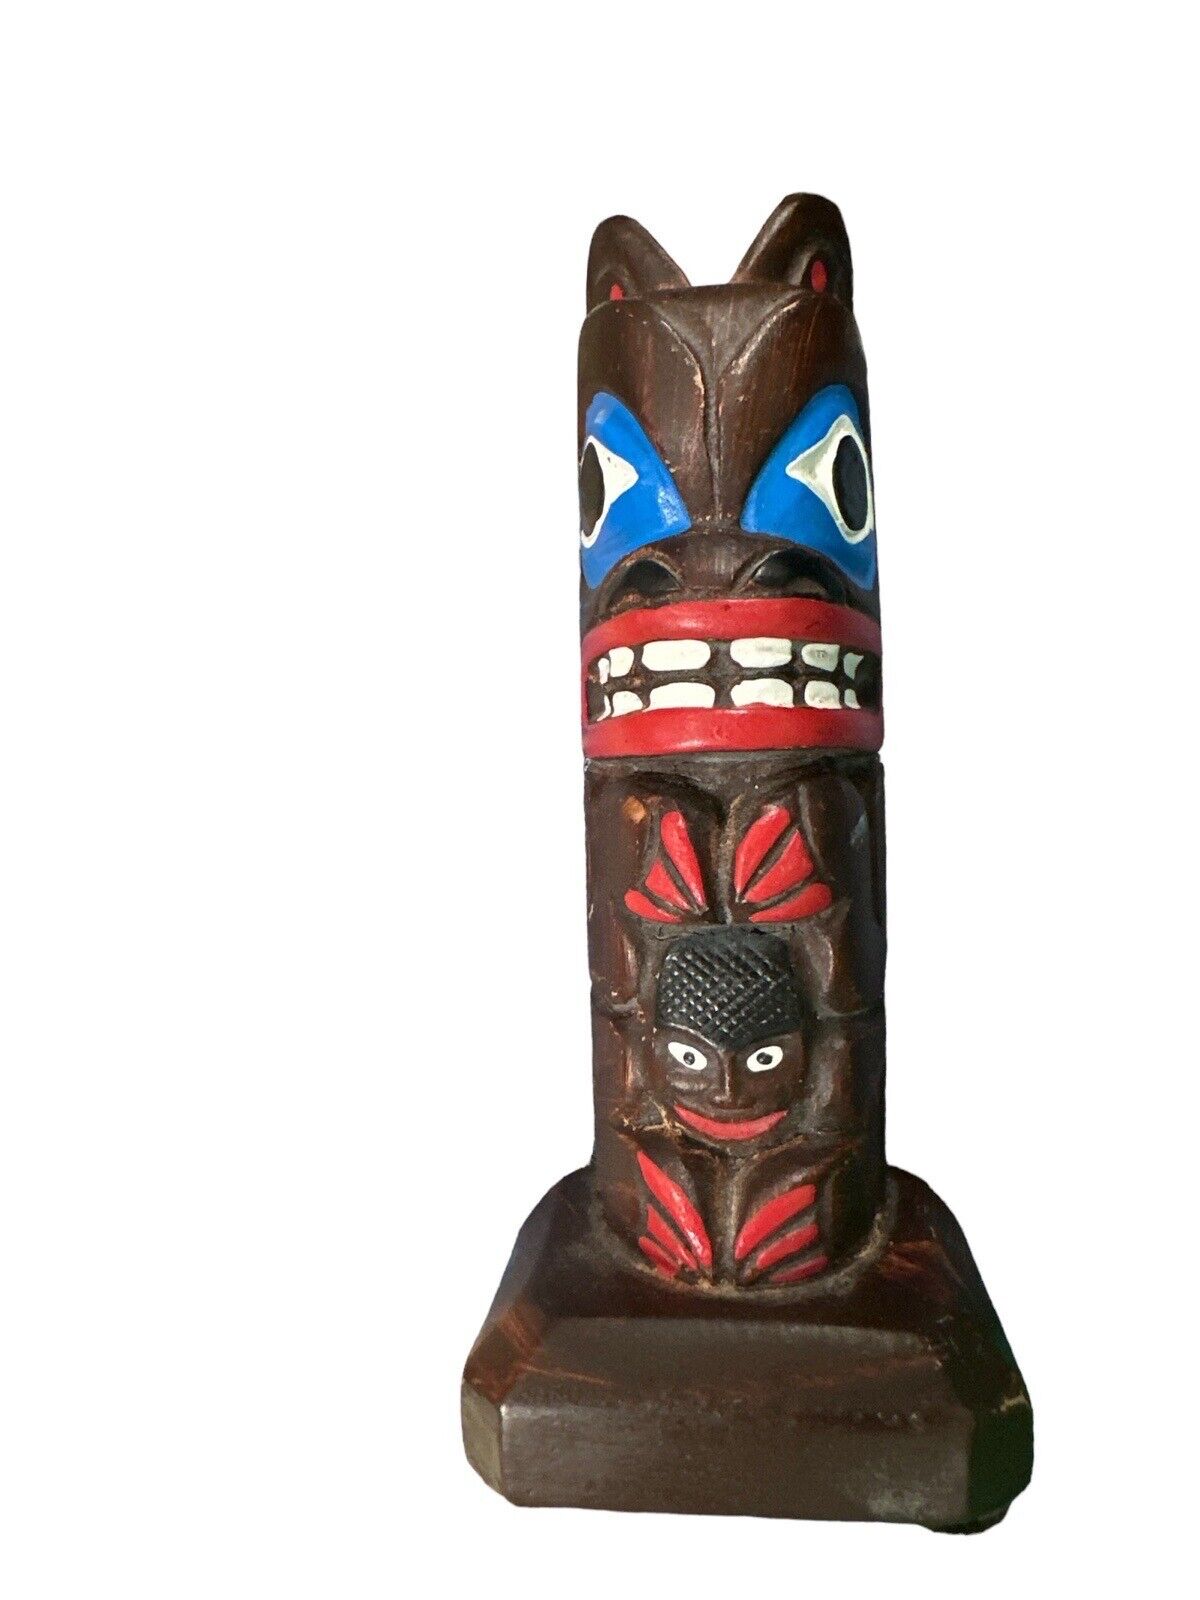 Authentic Alaska Craft Ketchikan Alaska Totem Pole Figurine